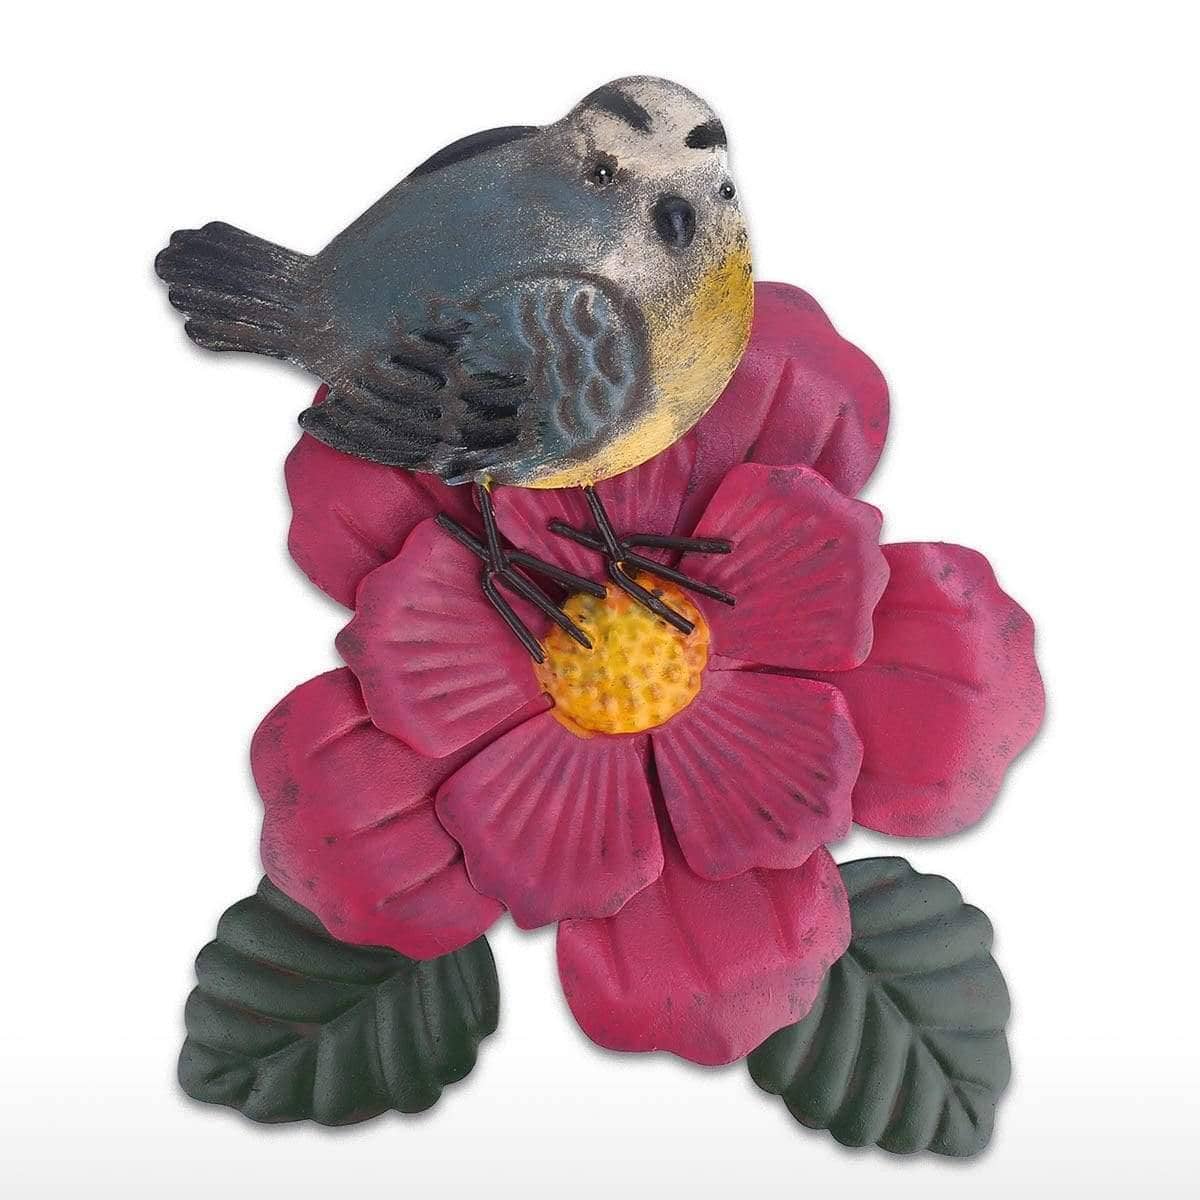 Bird & Flower Garden Stake - Charm for Your Garden Decor